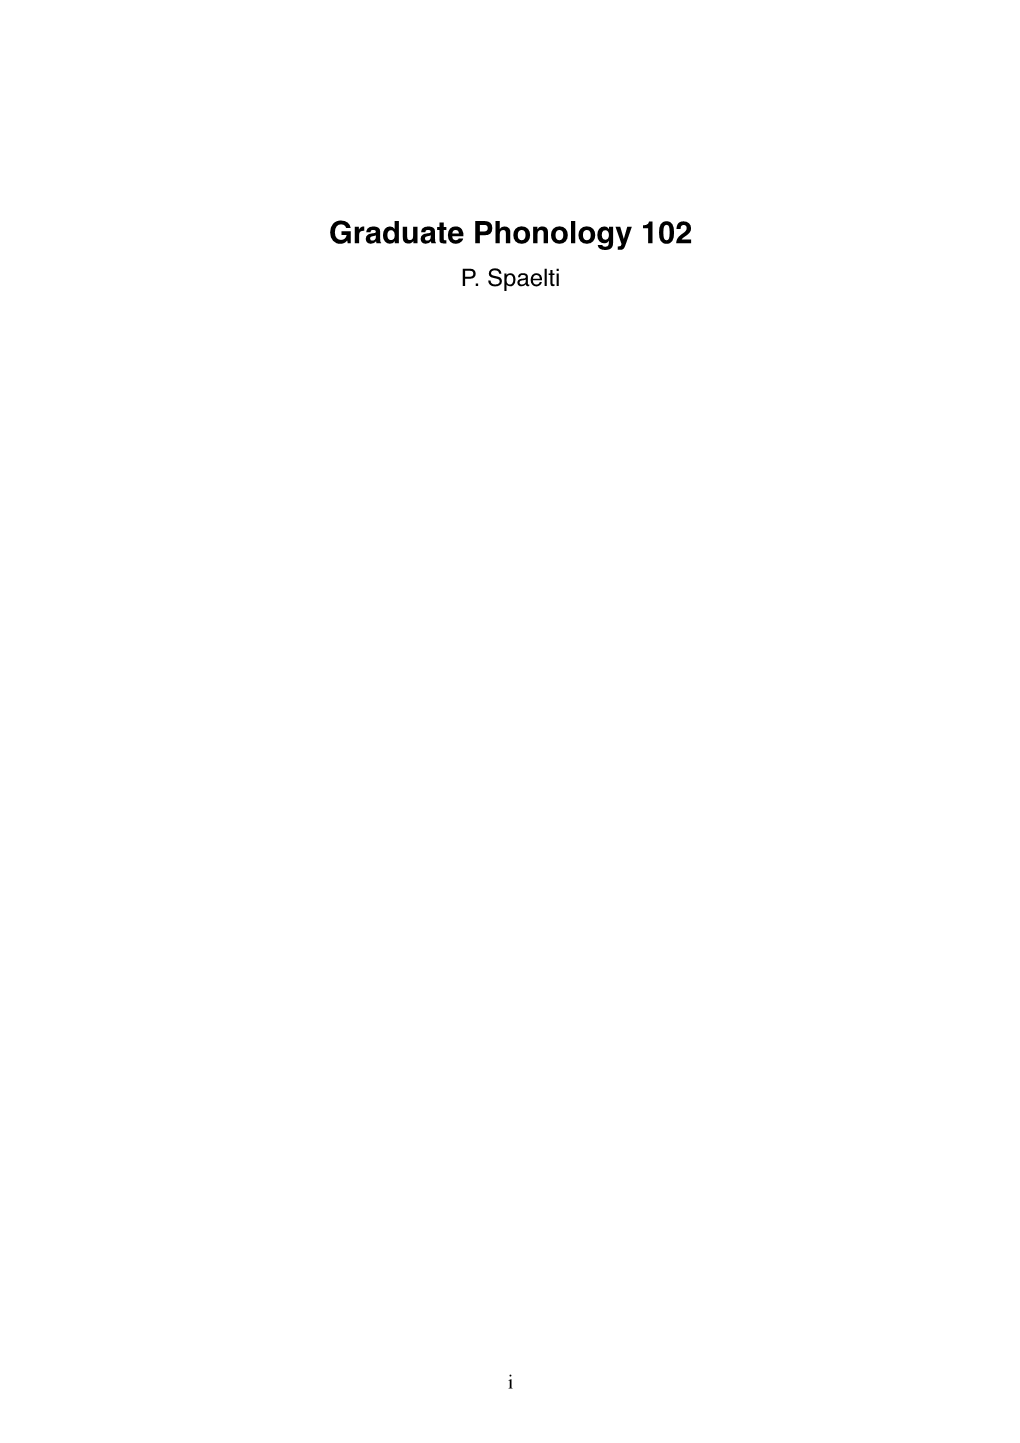 Graduate Phonology 102 P